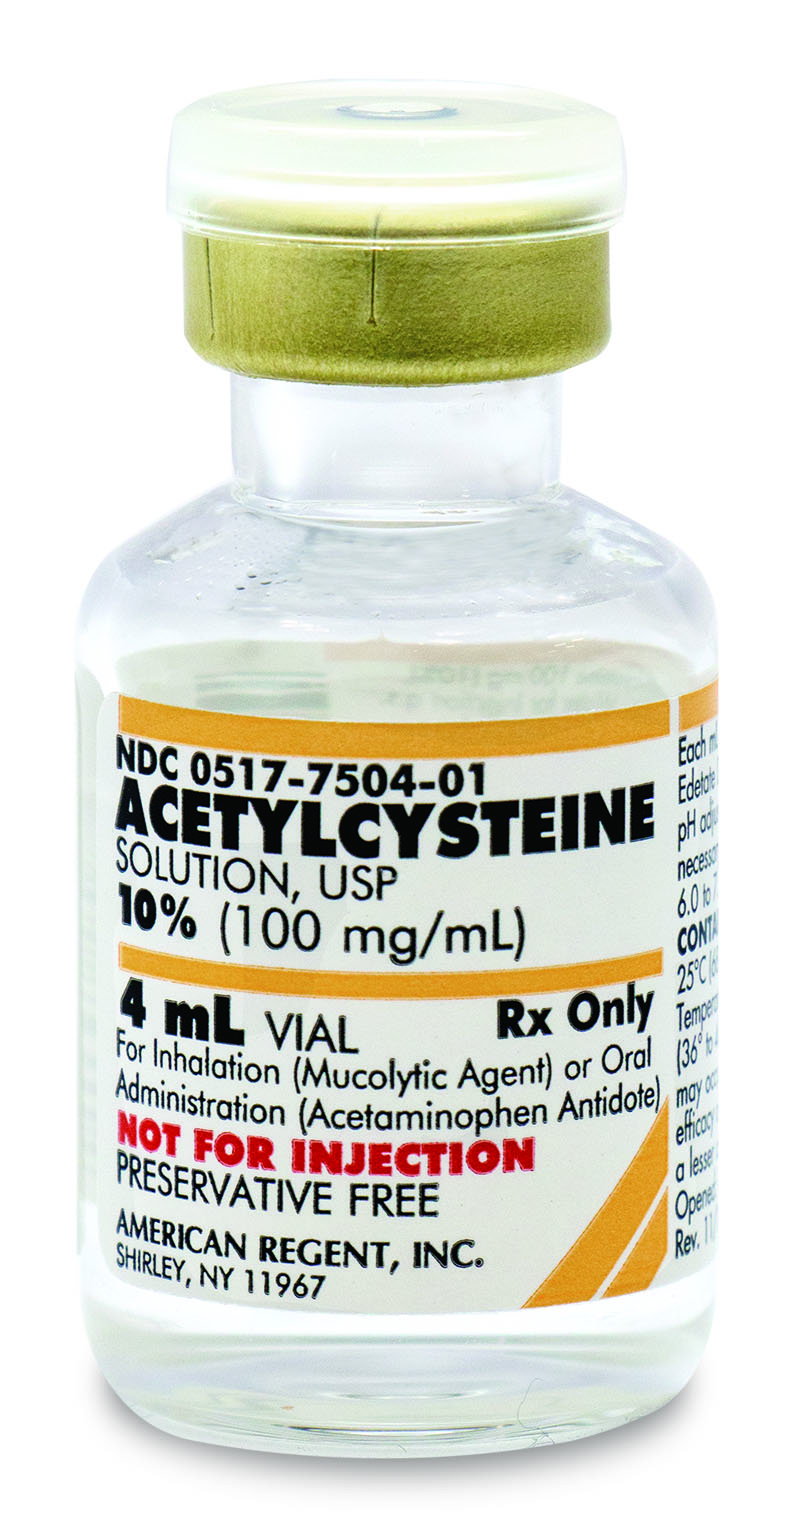 Acetylcysteine / Products / American Regent